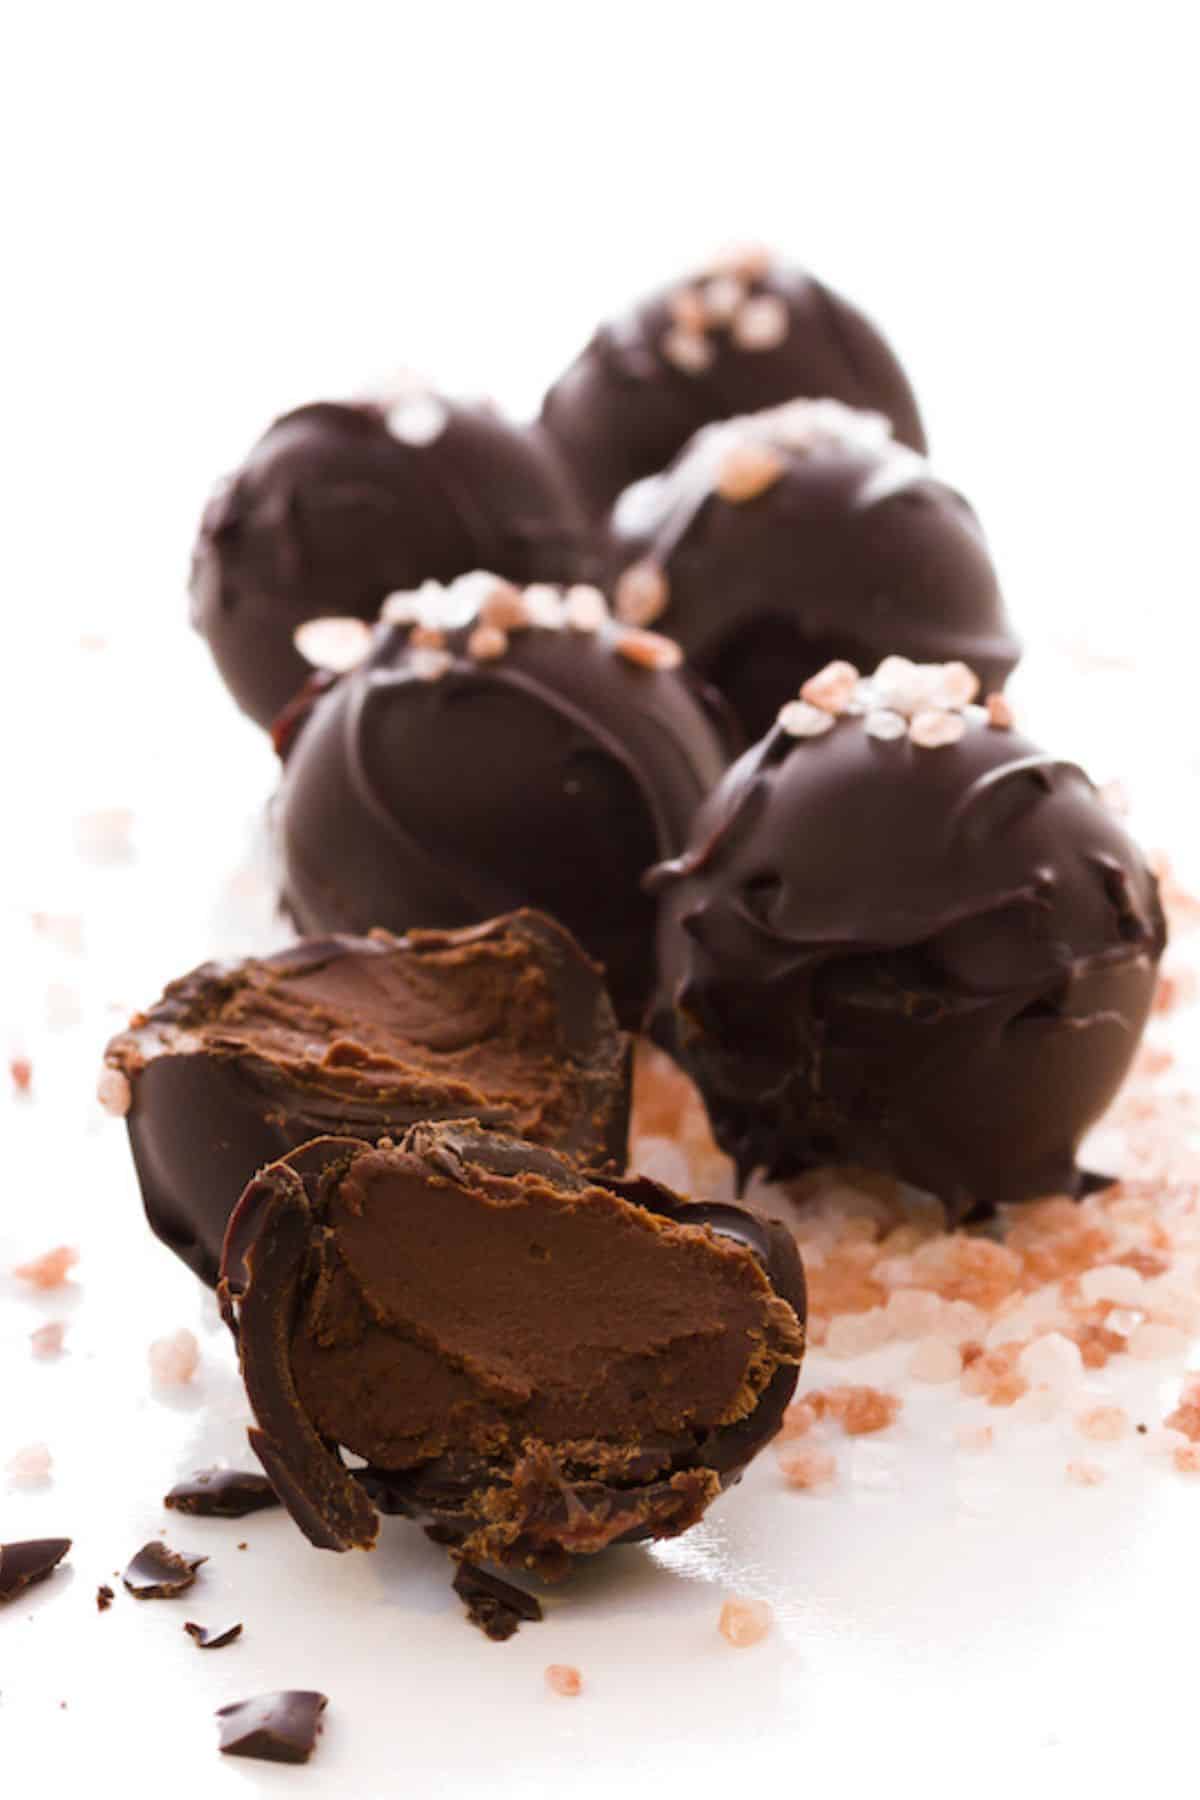 chocolate tahini truffles with sea salt on top.